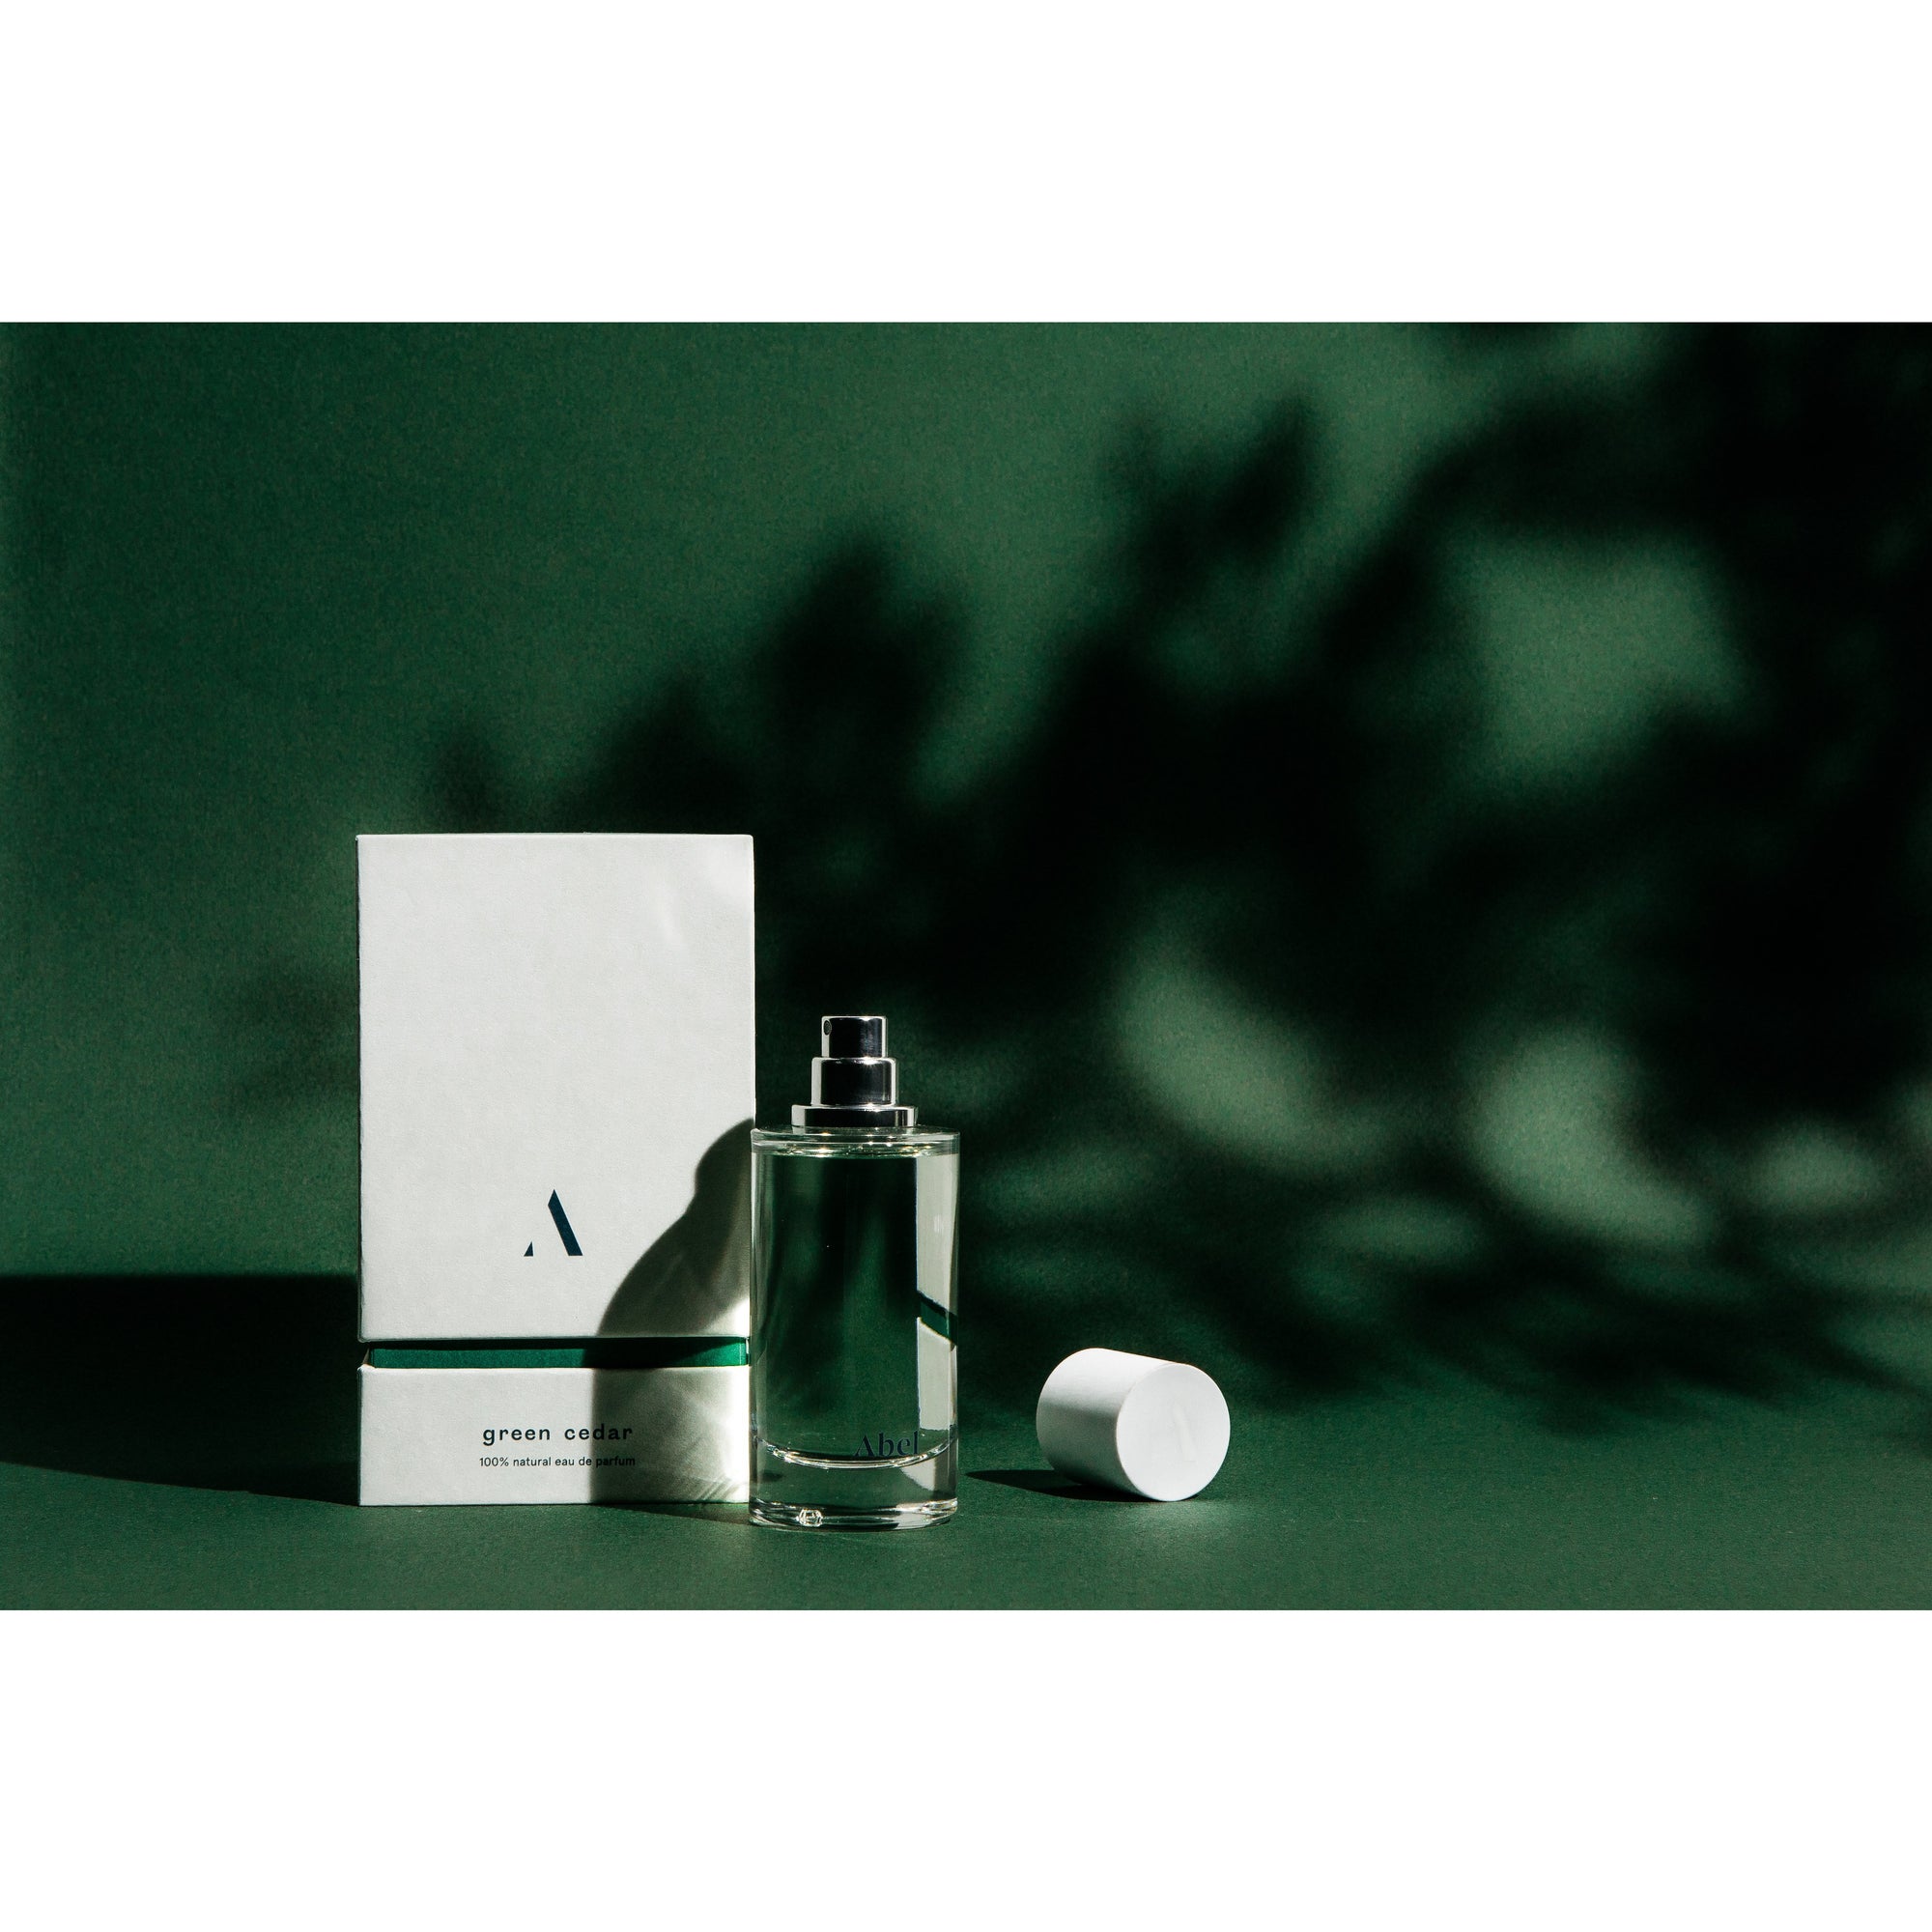 Abel Green Cedar 100% Natural Eau de Parfum